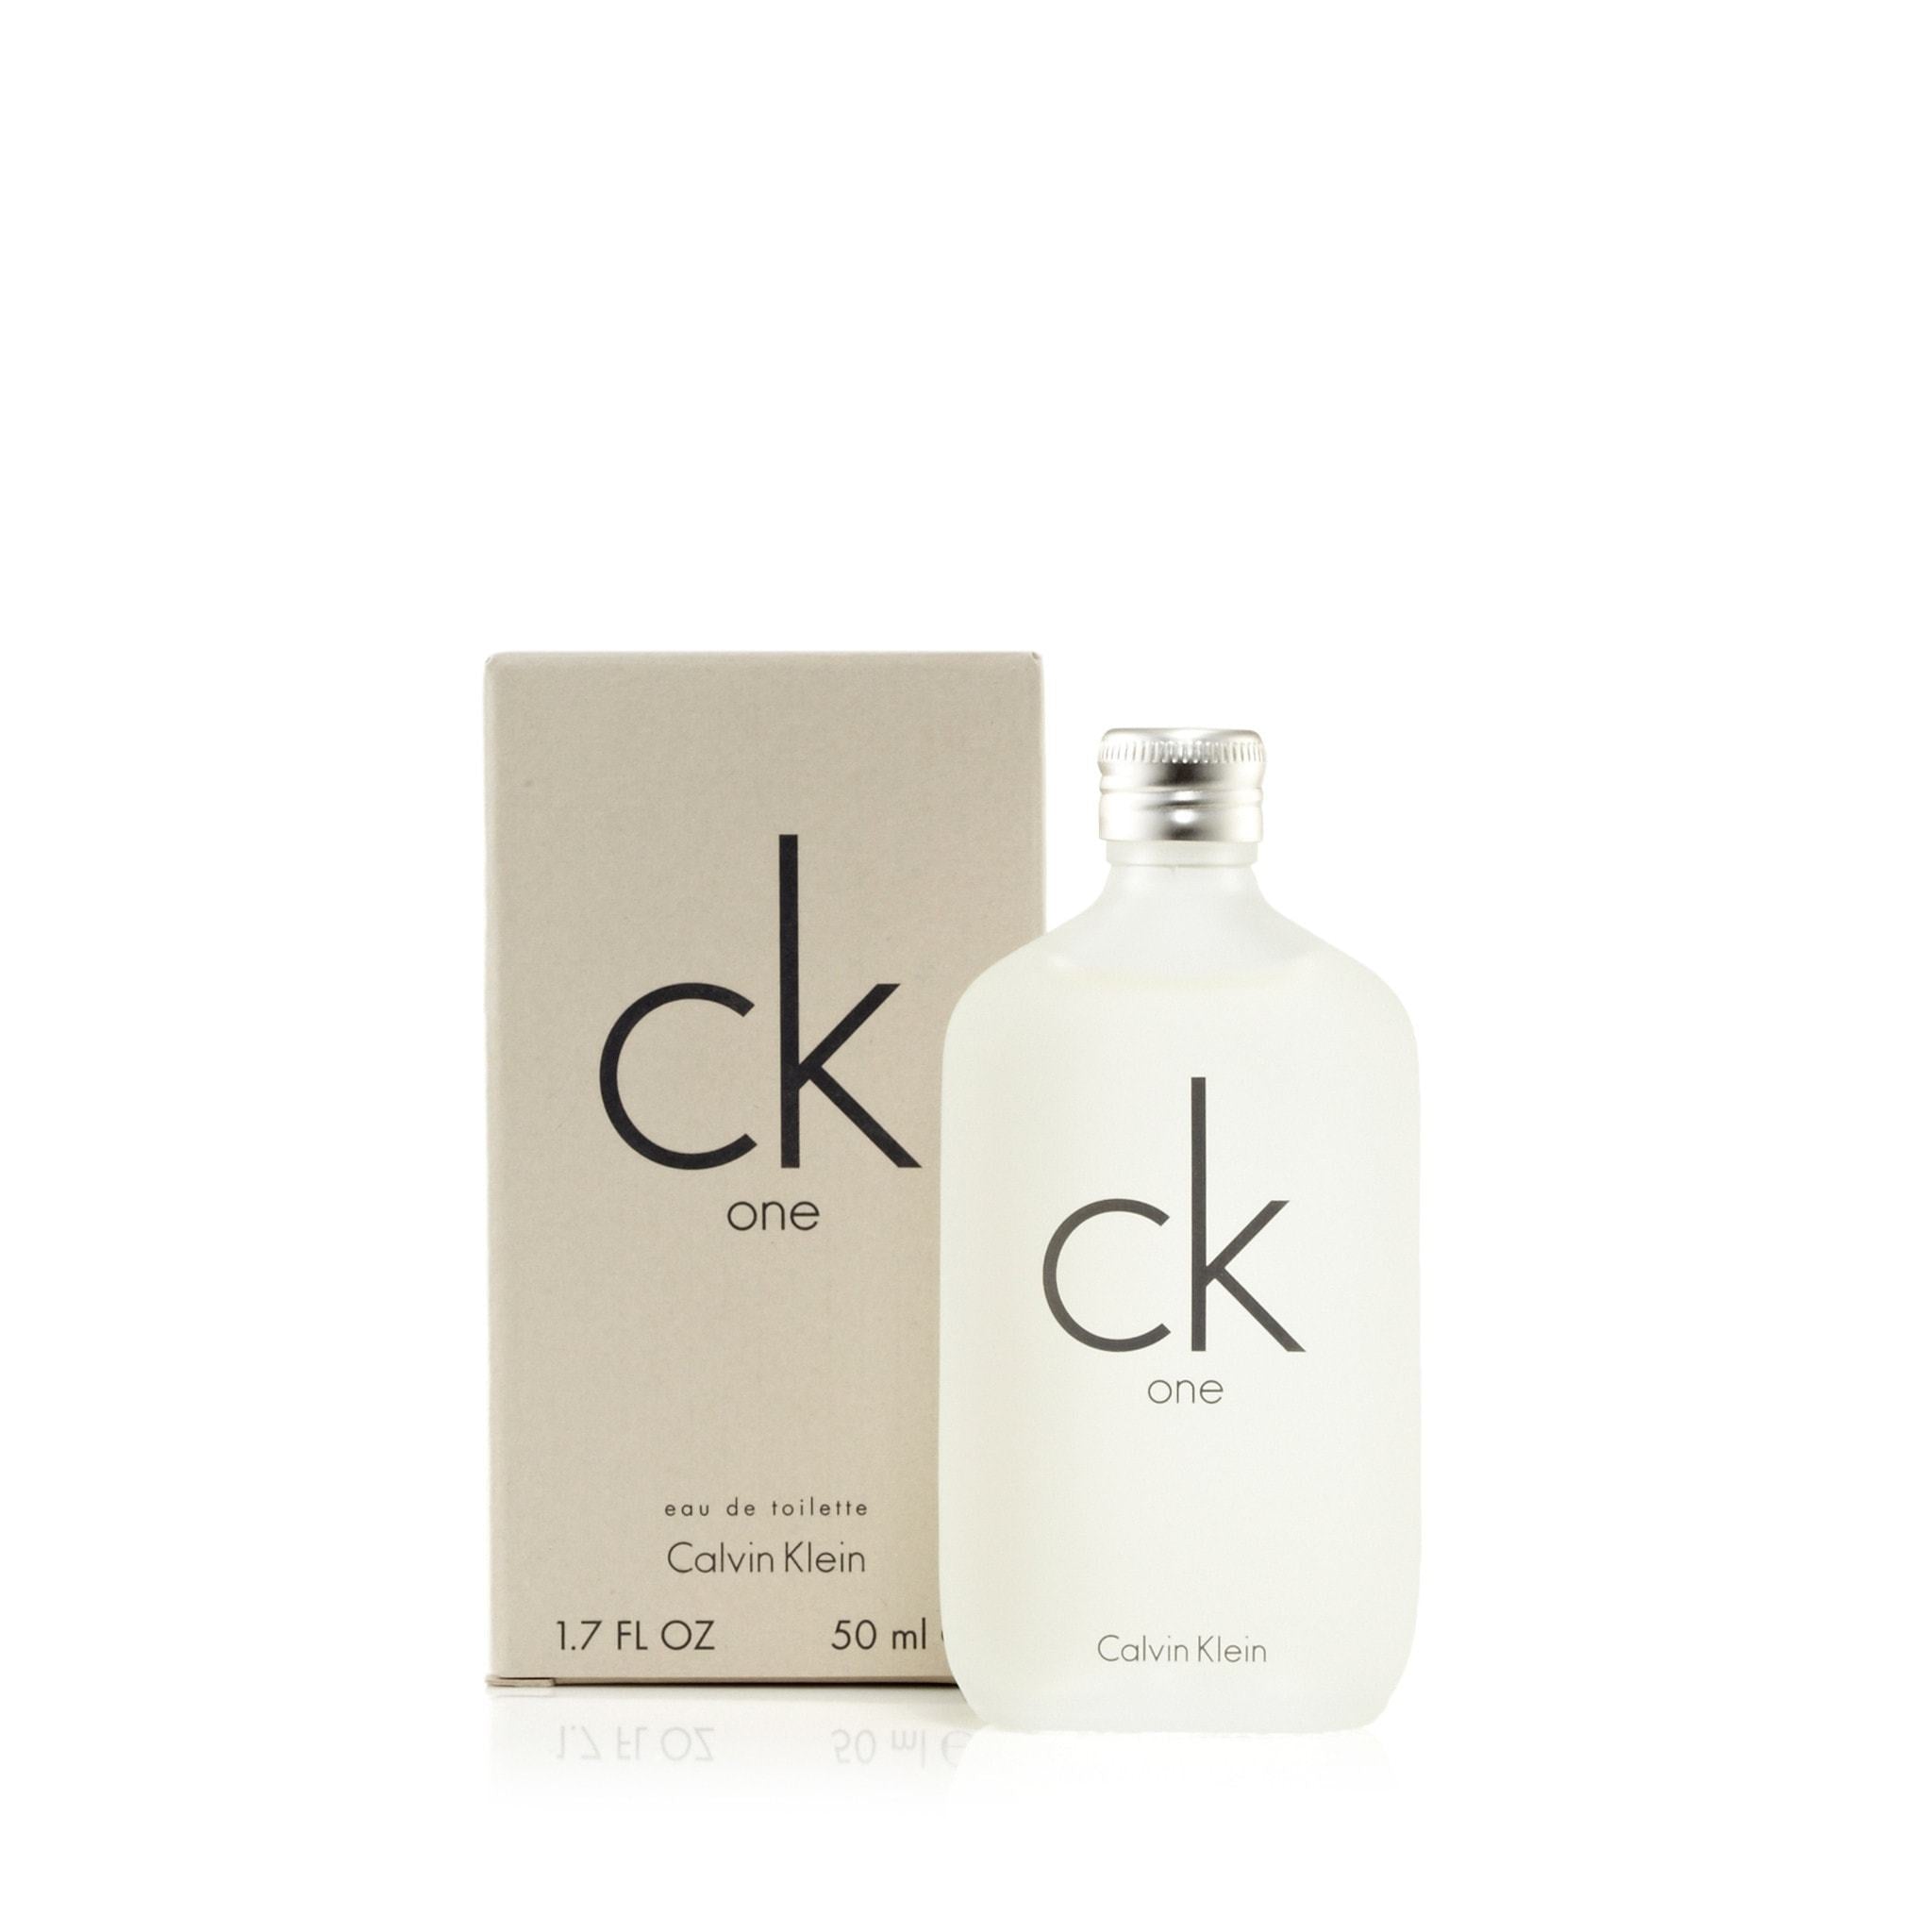 Calvin Klein CK One Eau de Toilette - Perfume Unissex 100ml